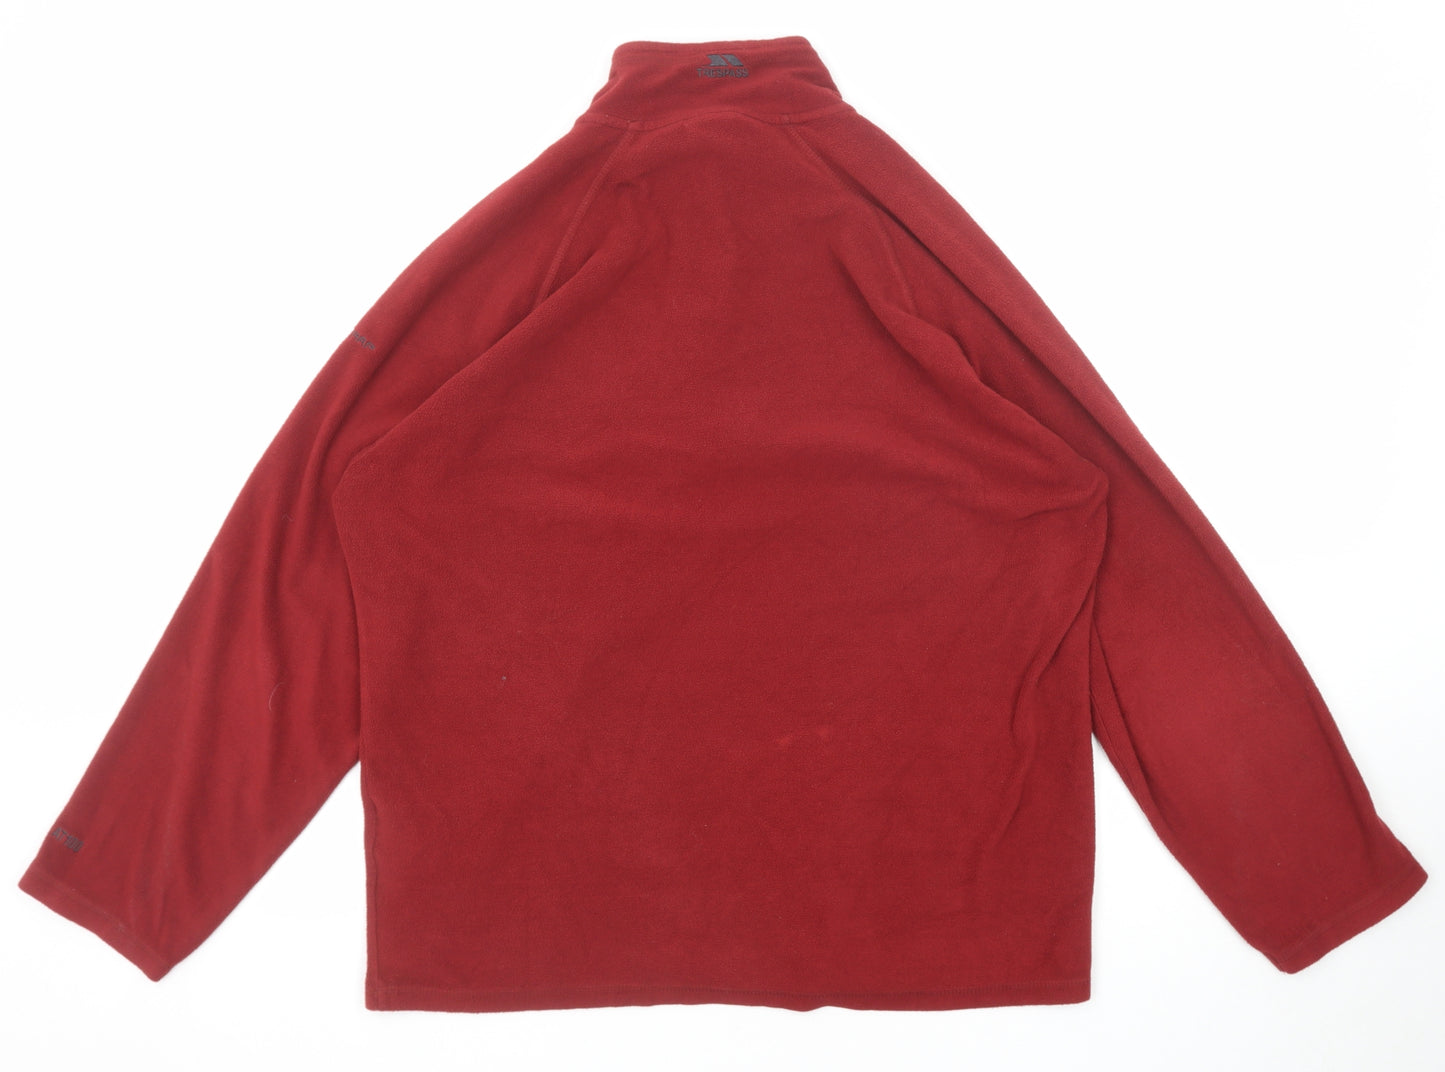 Trespass Mens Red Polyester Pullover Sweatshirt Size XL